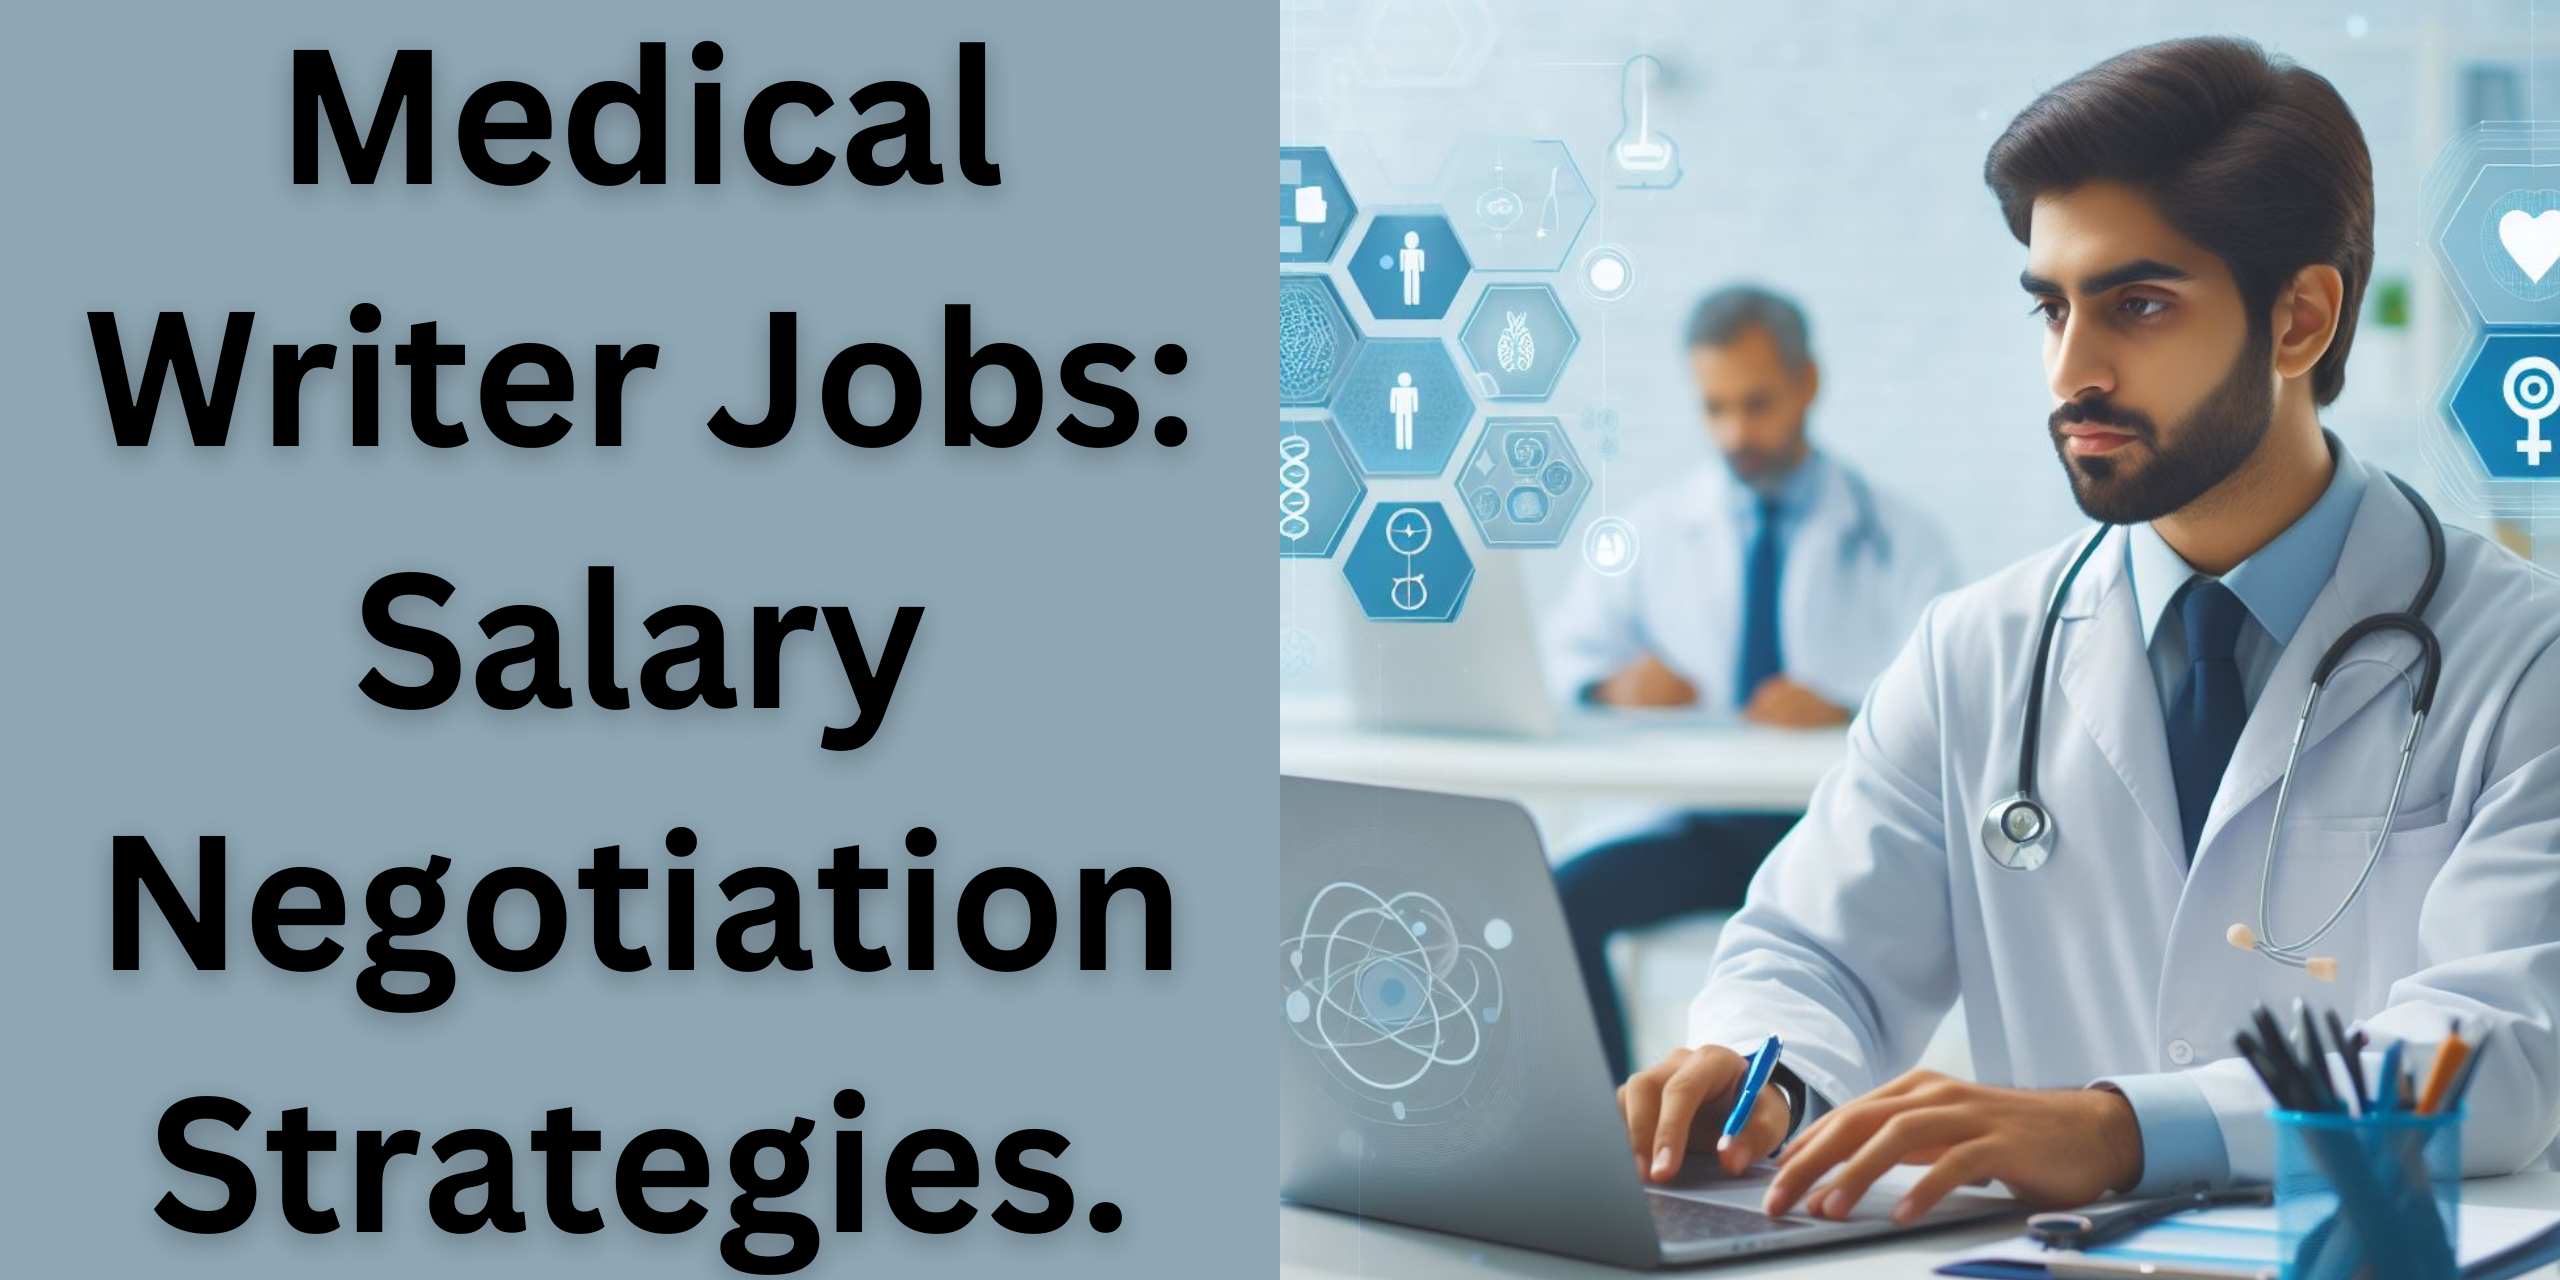 Alt="Medical Writer Jobs: Salary Negotiation Strategies"